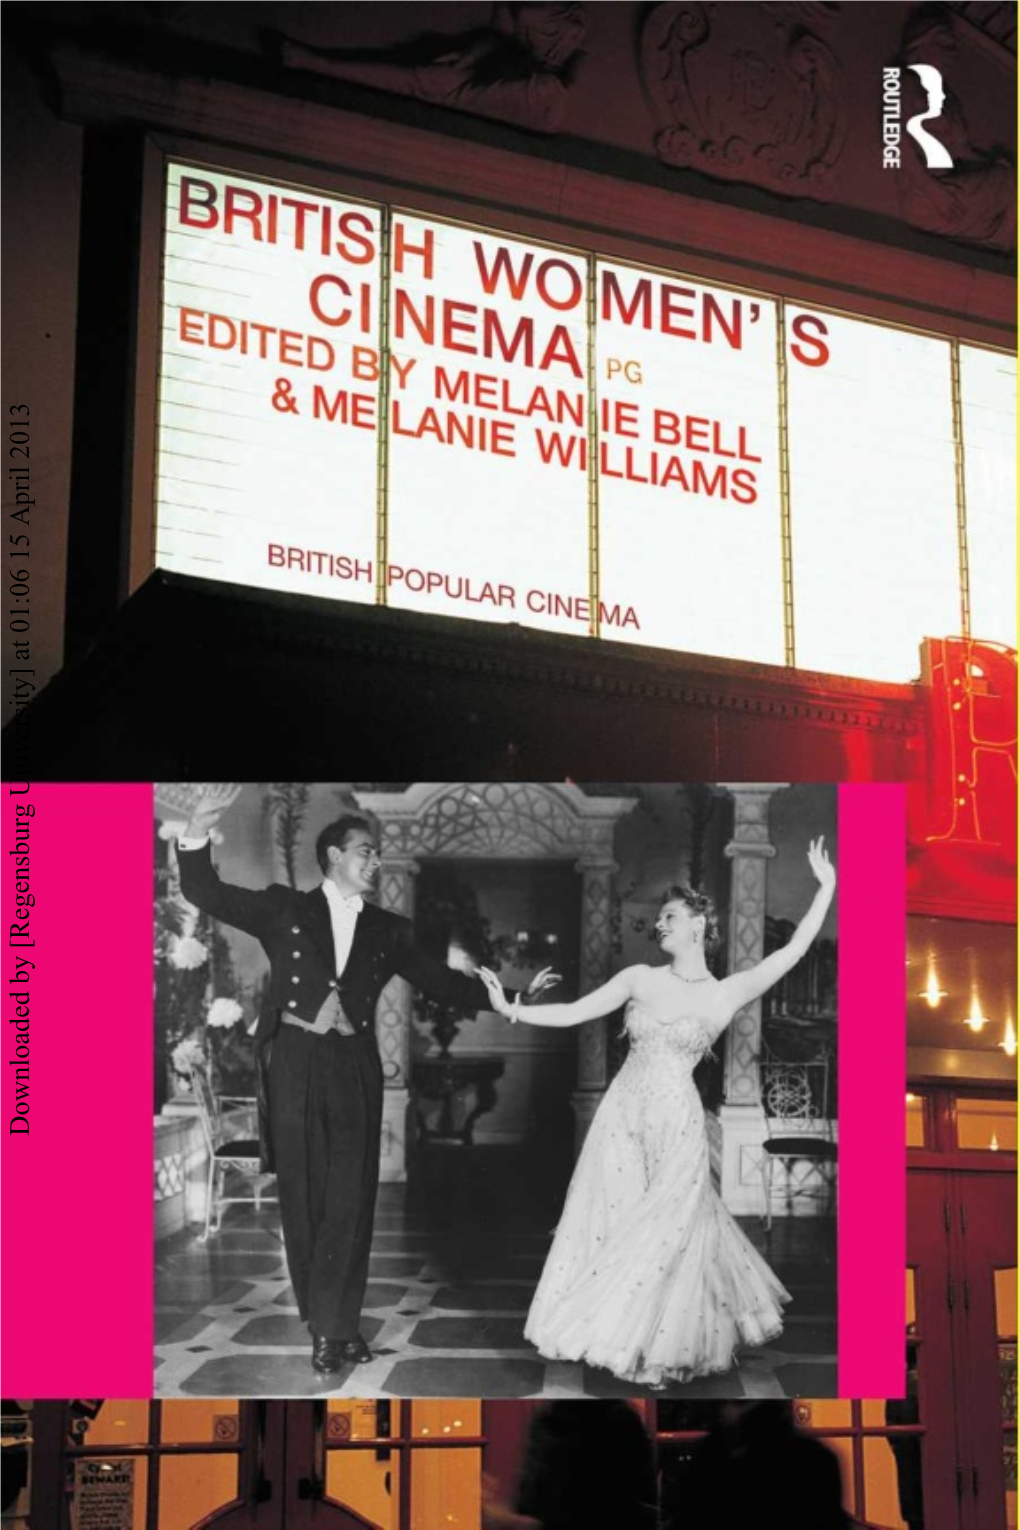 British Women's Cinema / Edited by Melanie Bell and Melanie Williams